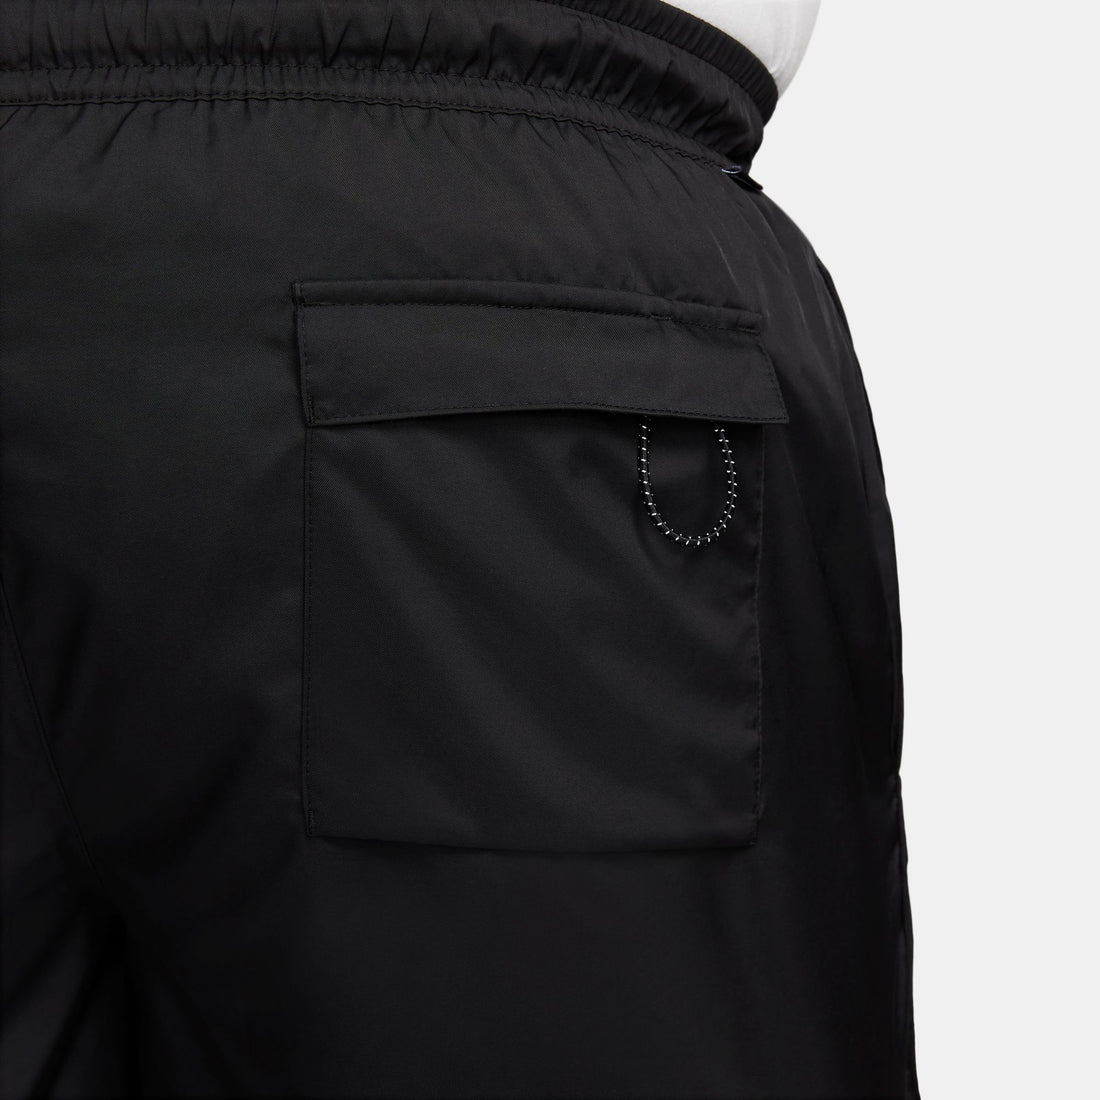 Nike Sportswear Essential Woven Lined Flow Shorts (Black/White)